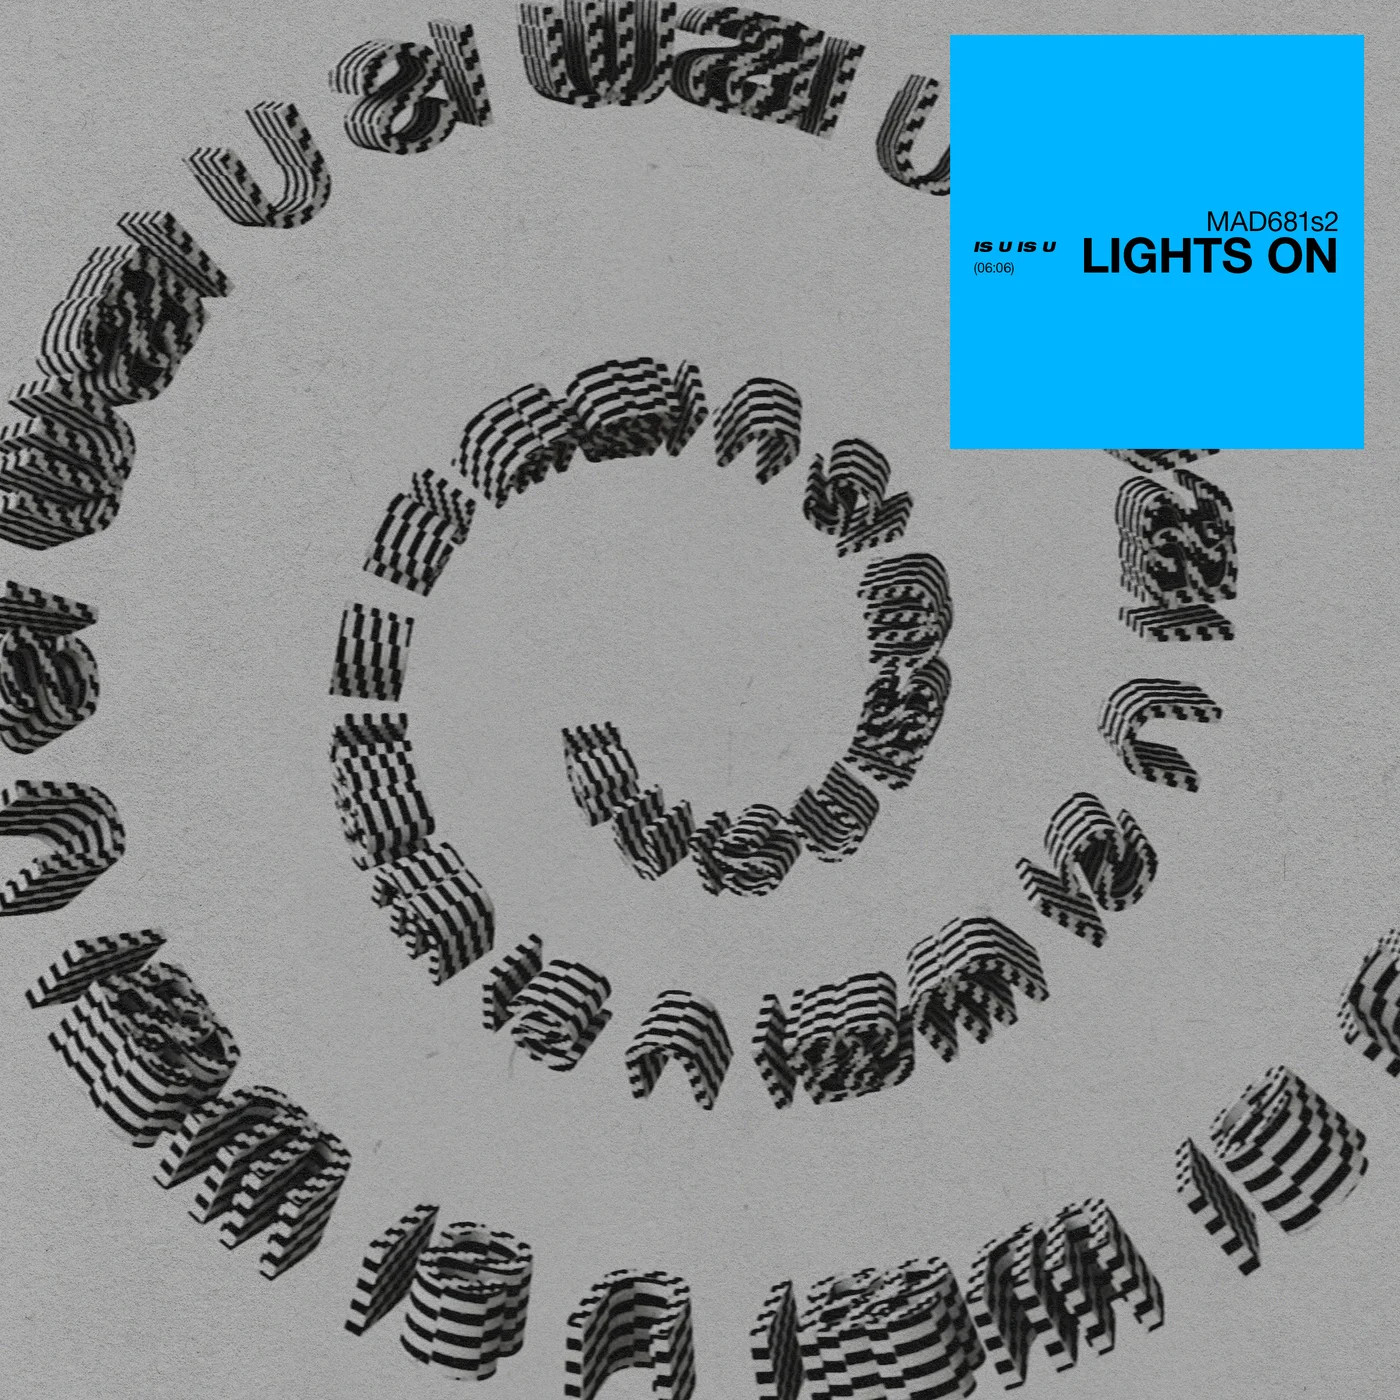 Kito, Chrome Sparks, & IS U IS U Lights On cover artwork